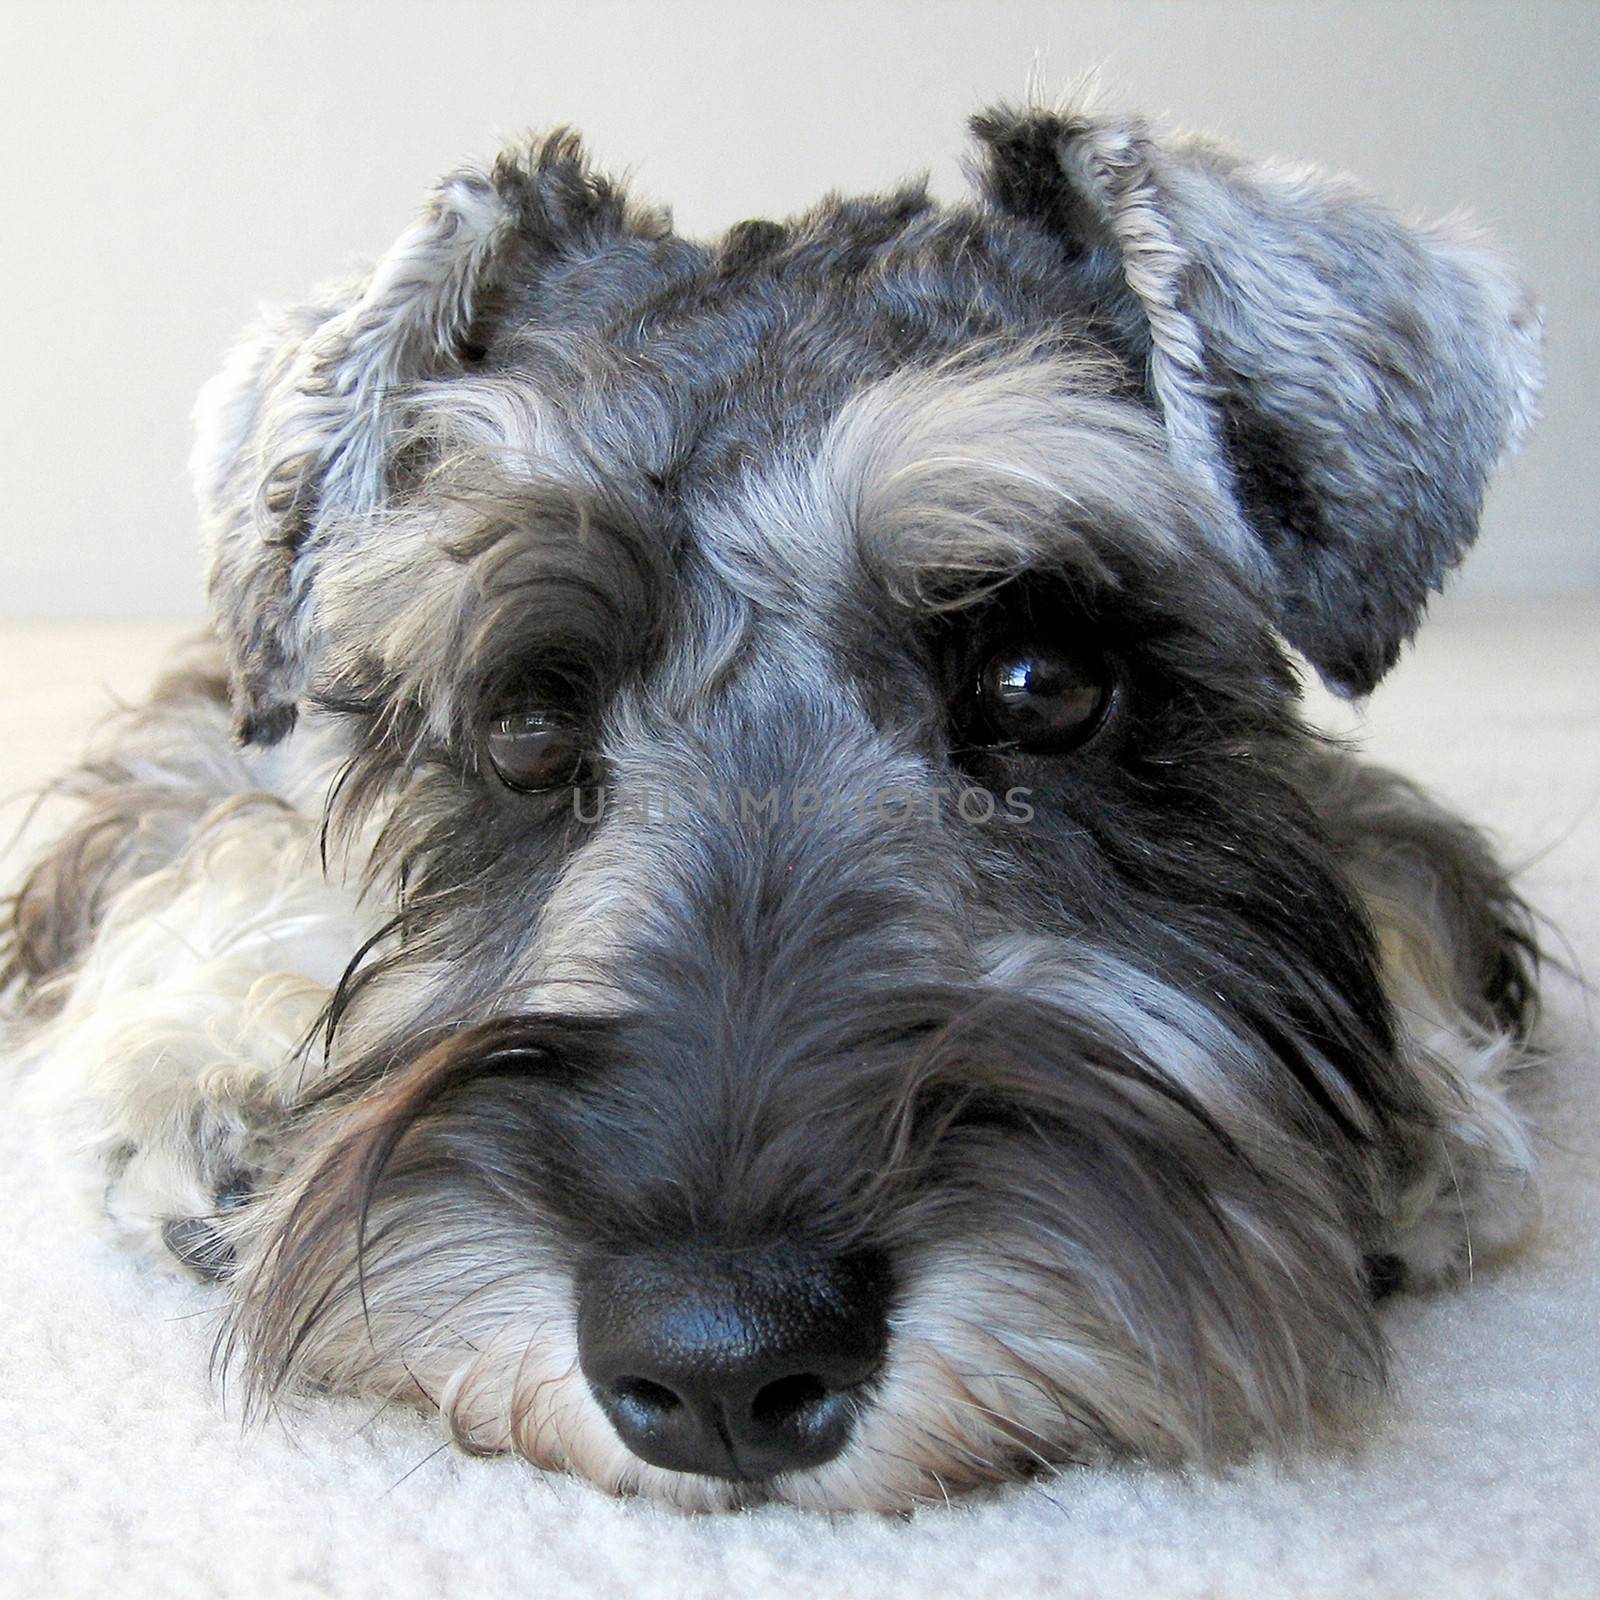 Portrait of cute dog lying on white carpet.